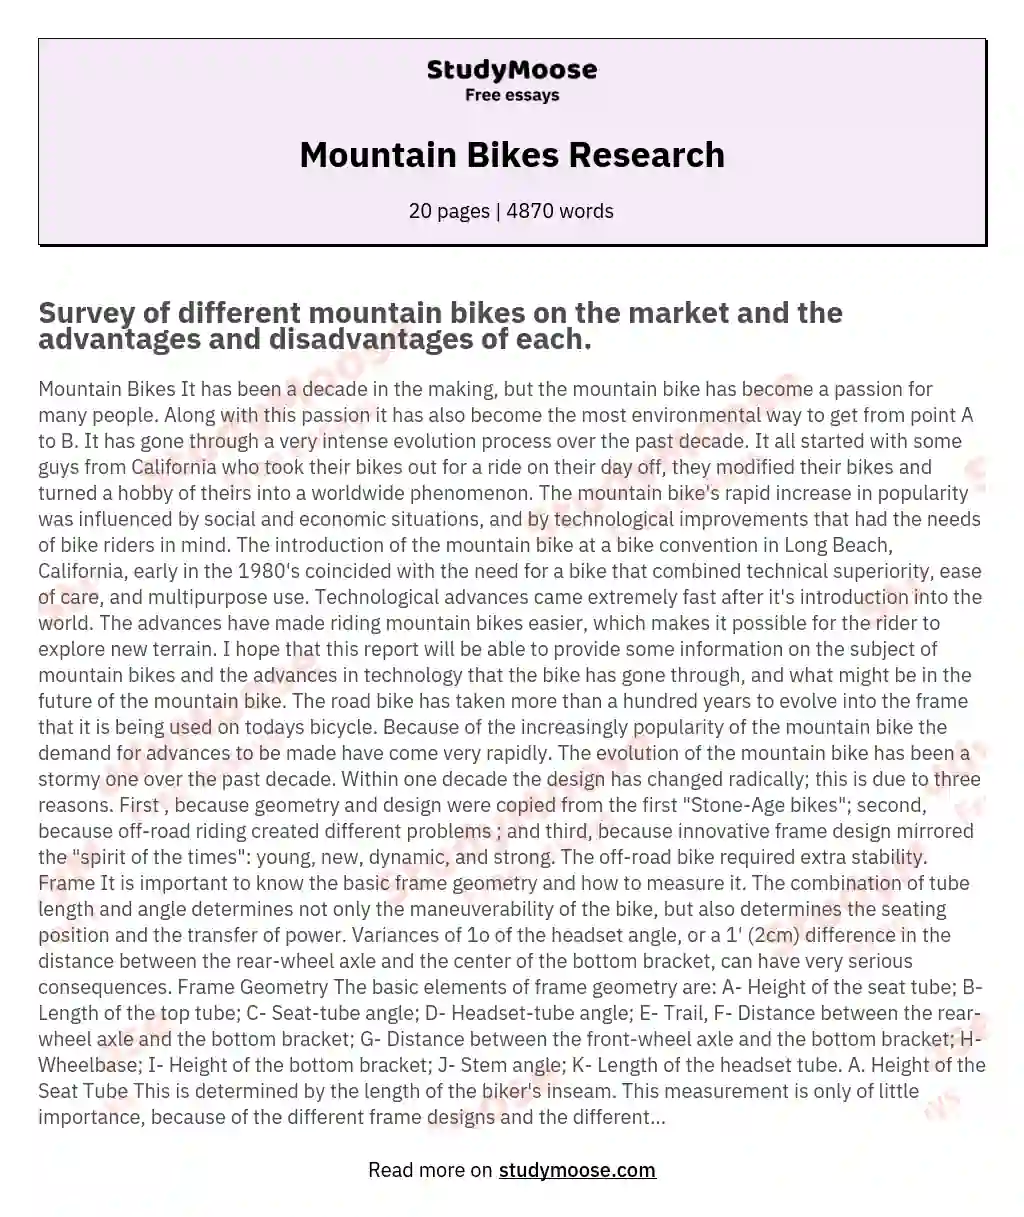 Mountain Bikes Research essay